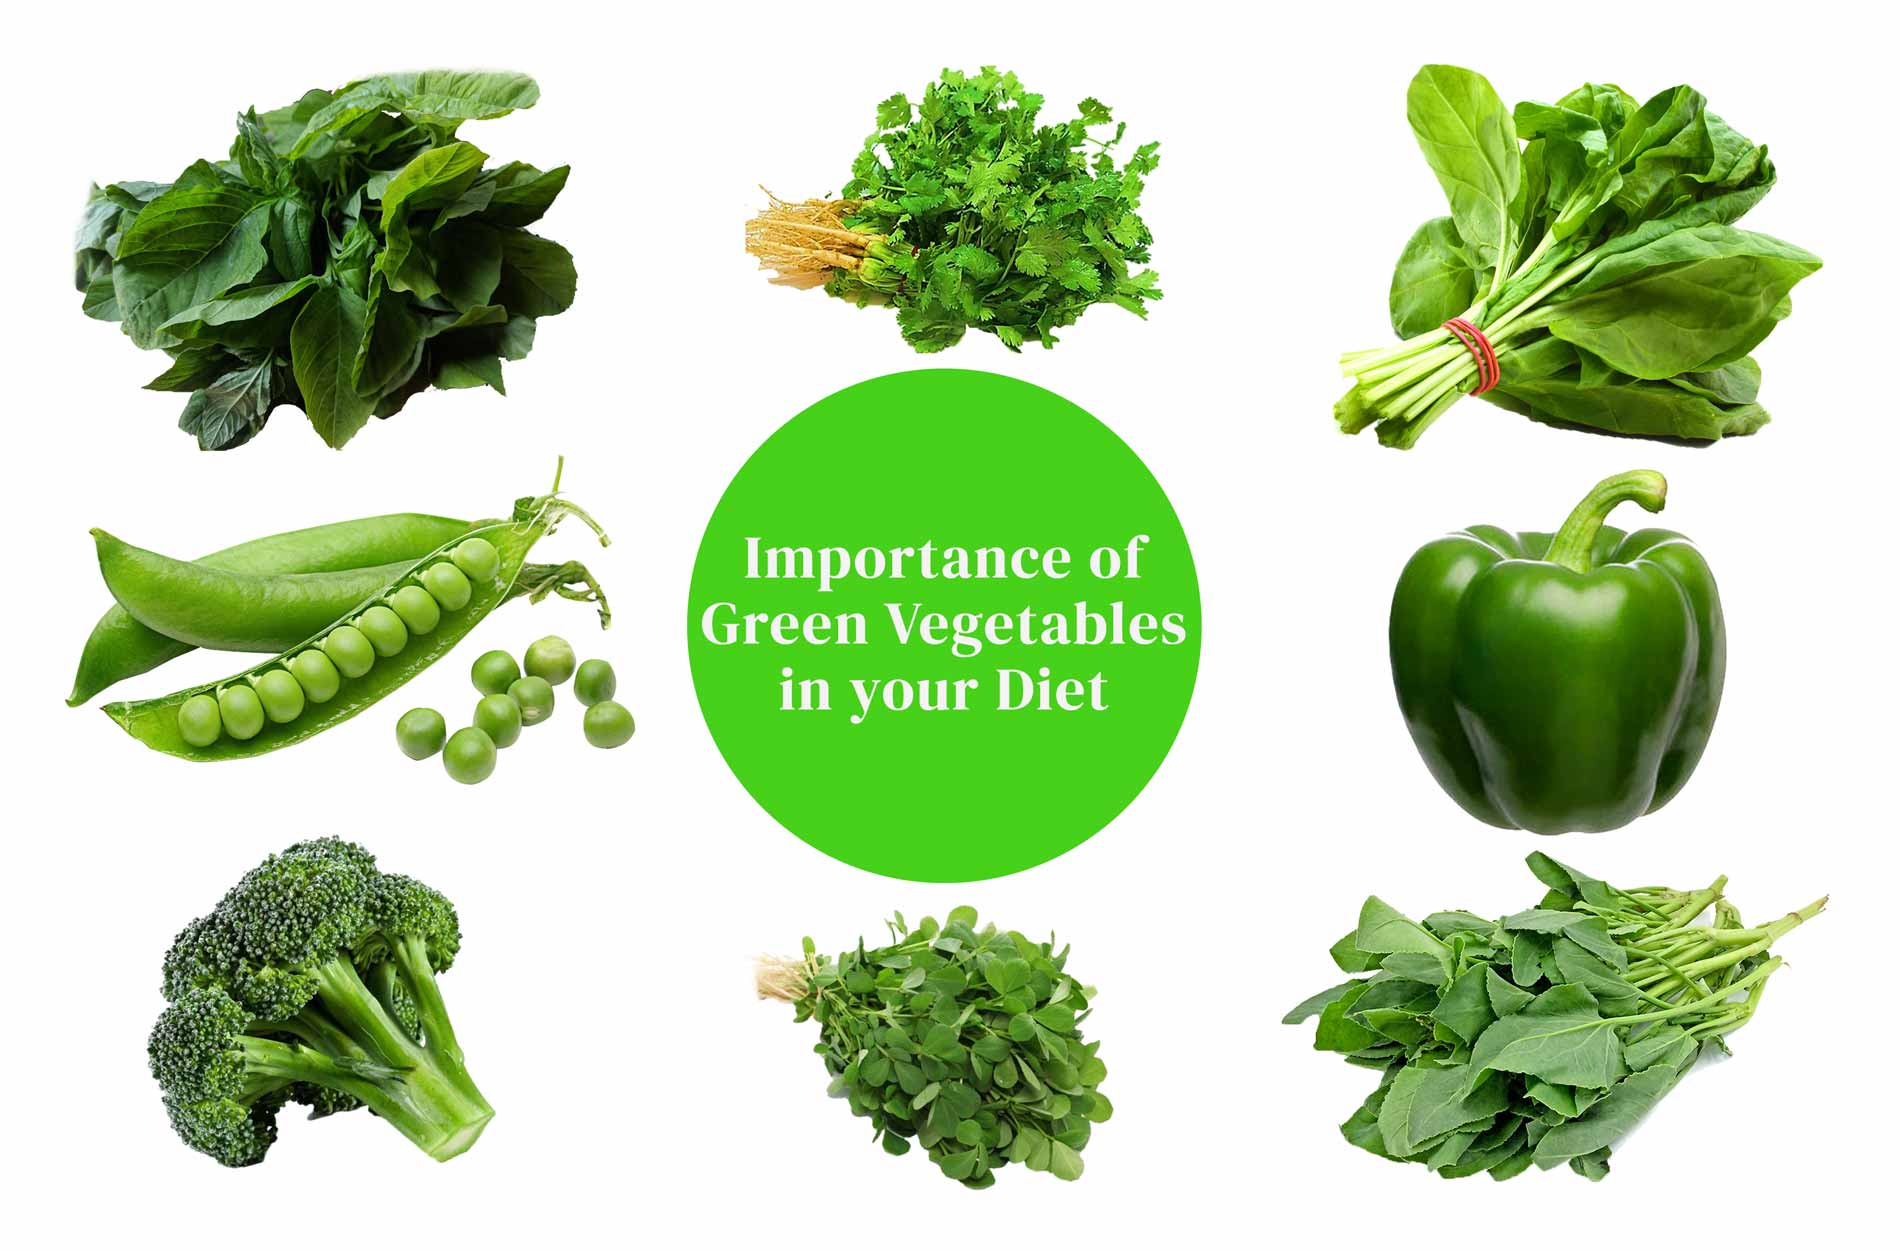 "Green Veggies: The Superheroes of Your Healthy Diet!"